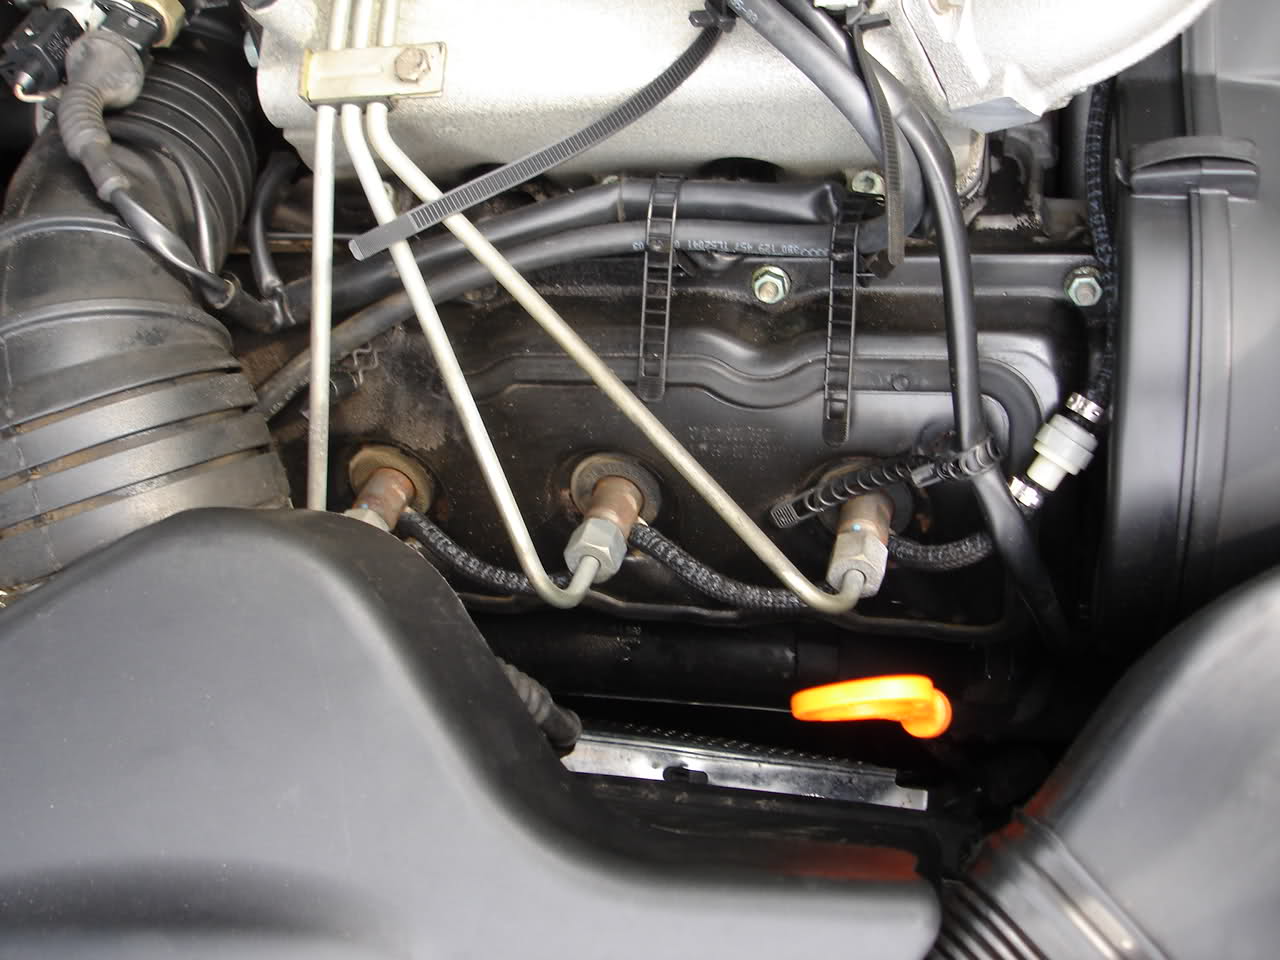 Wymiana Świec W Silniku V6 - Passat B5 (3B I 3Bg) - Passat Forum